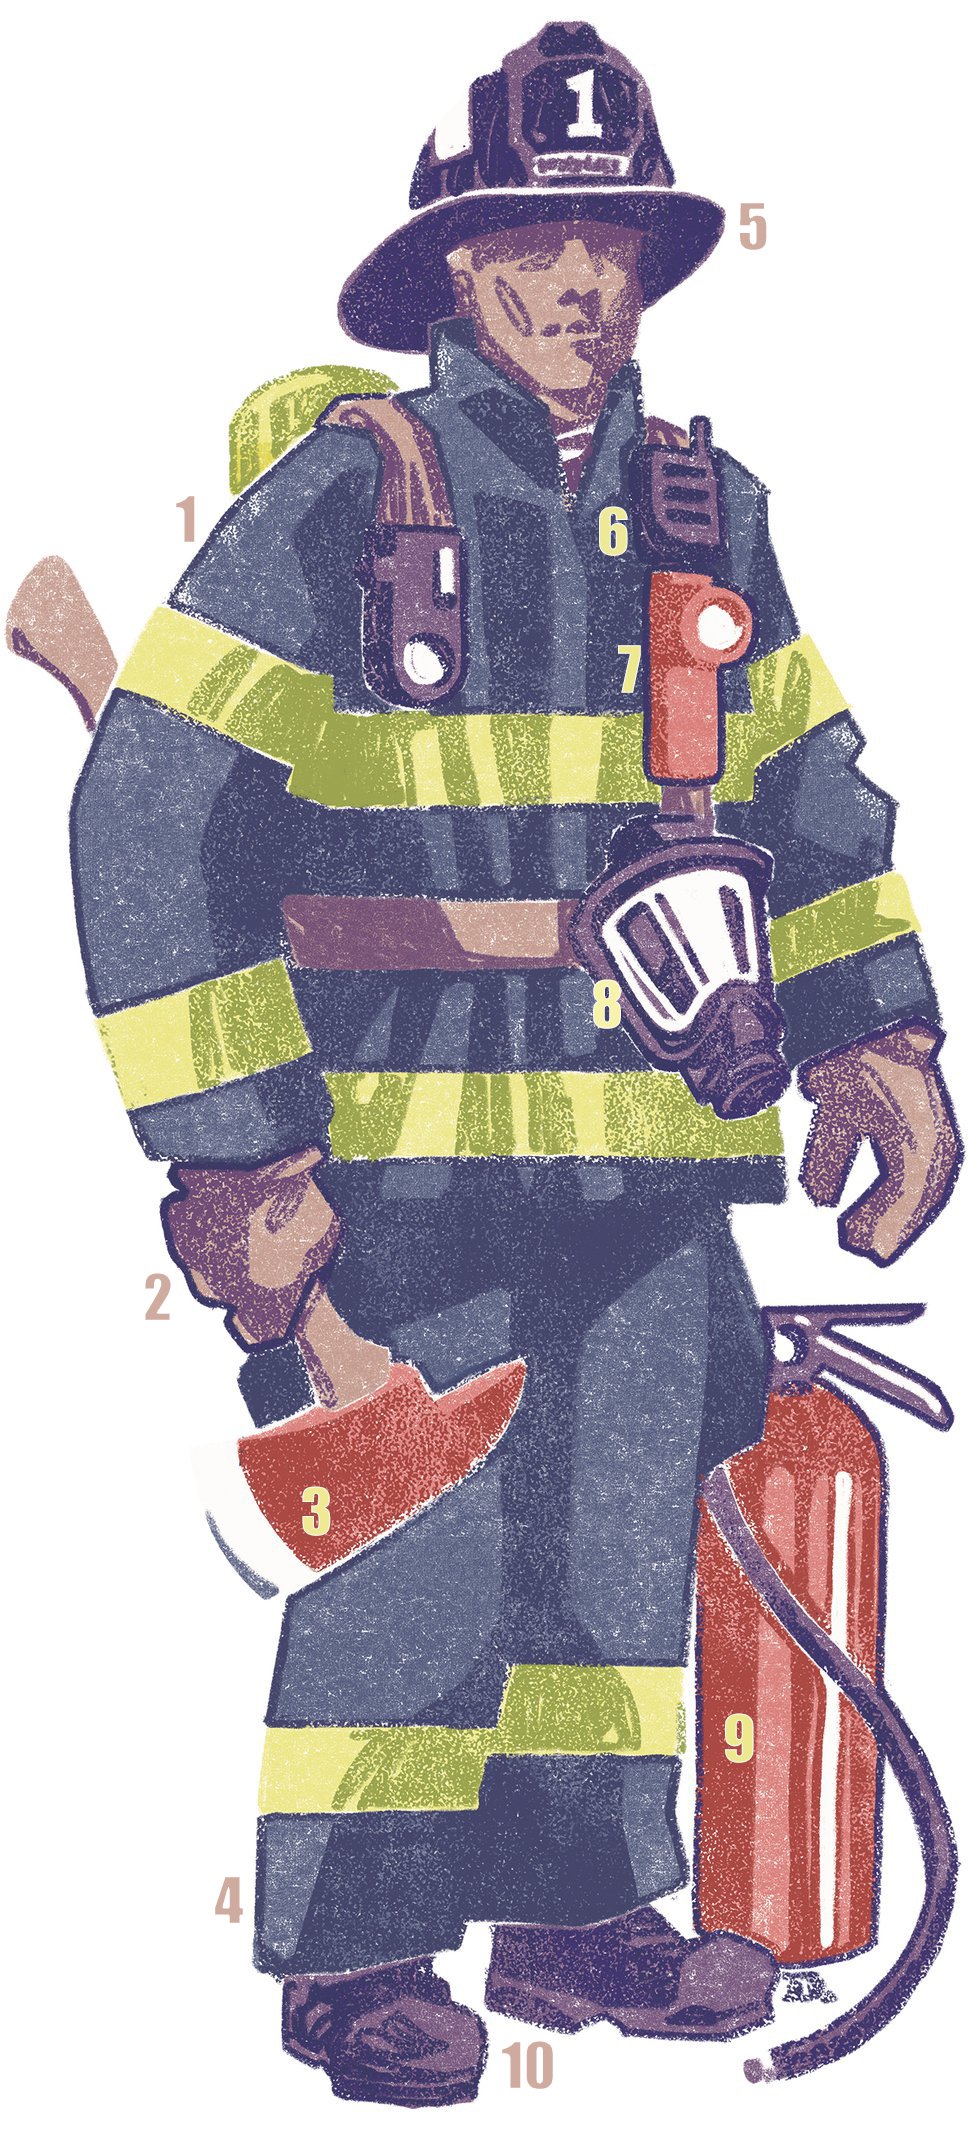 FEA_Firefighters_Illustration-numbered_DUNCANROBERTSON_rp0124.jpg